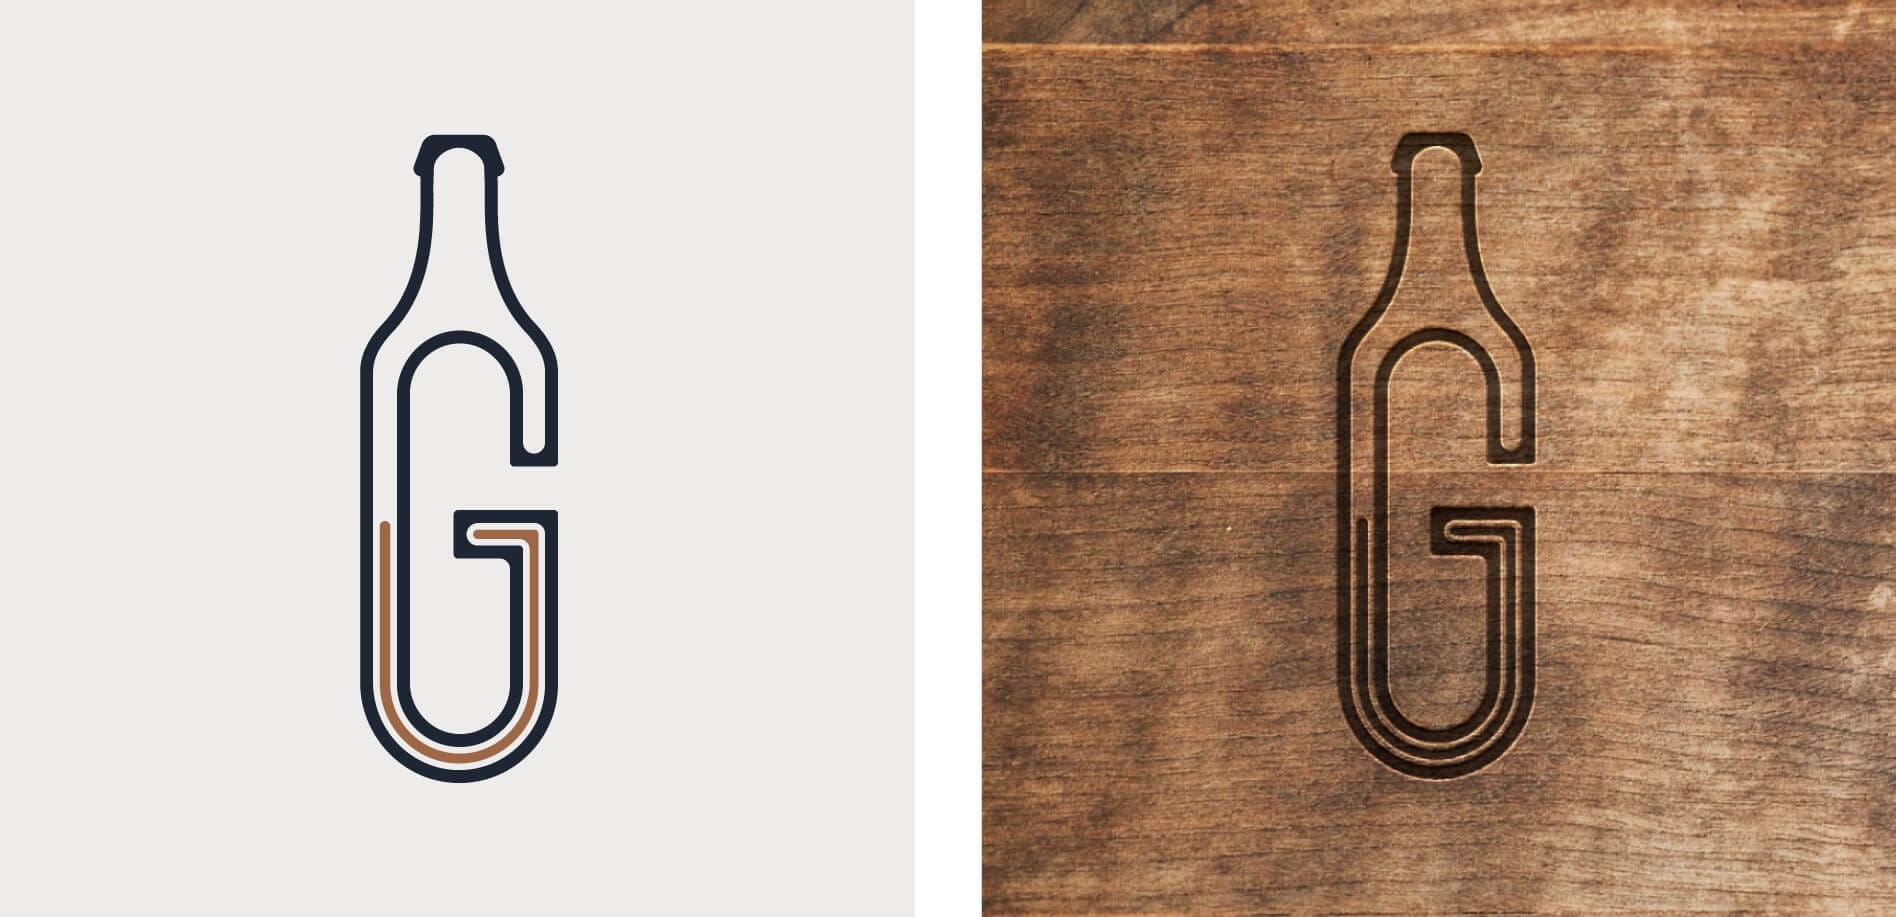 Logos - The Greyson Restaurant Branding and Web Design in Nashville, TN